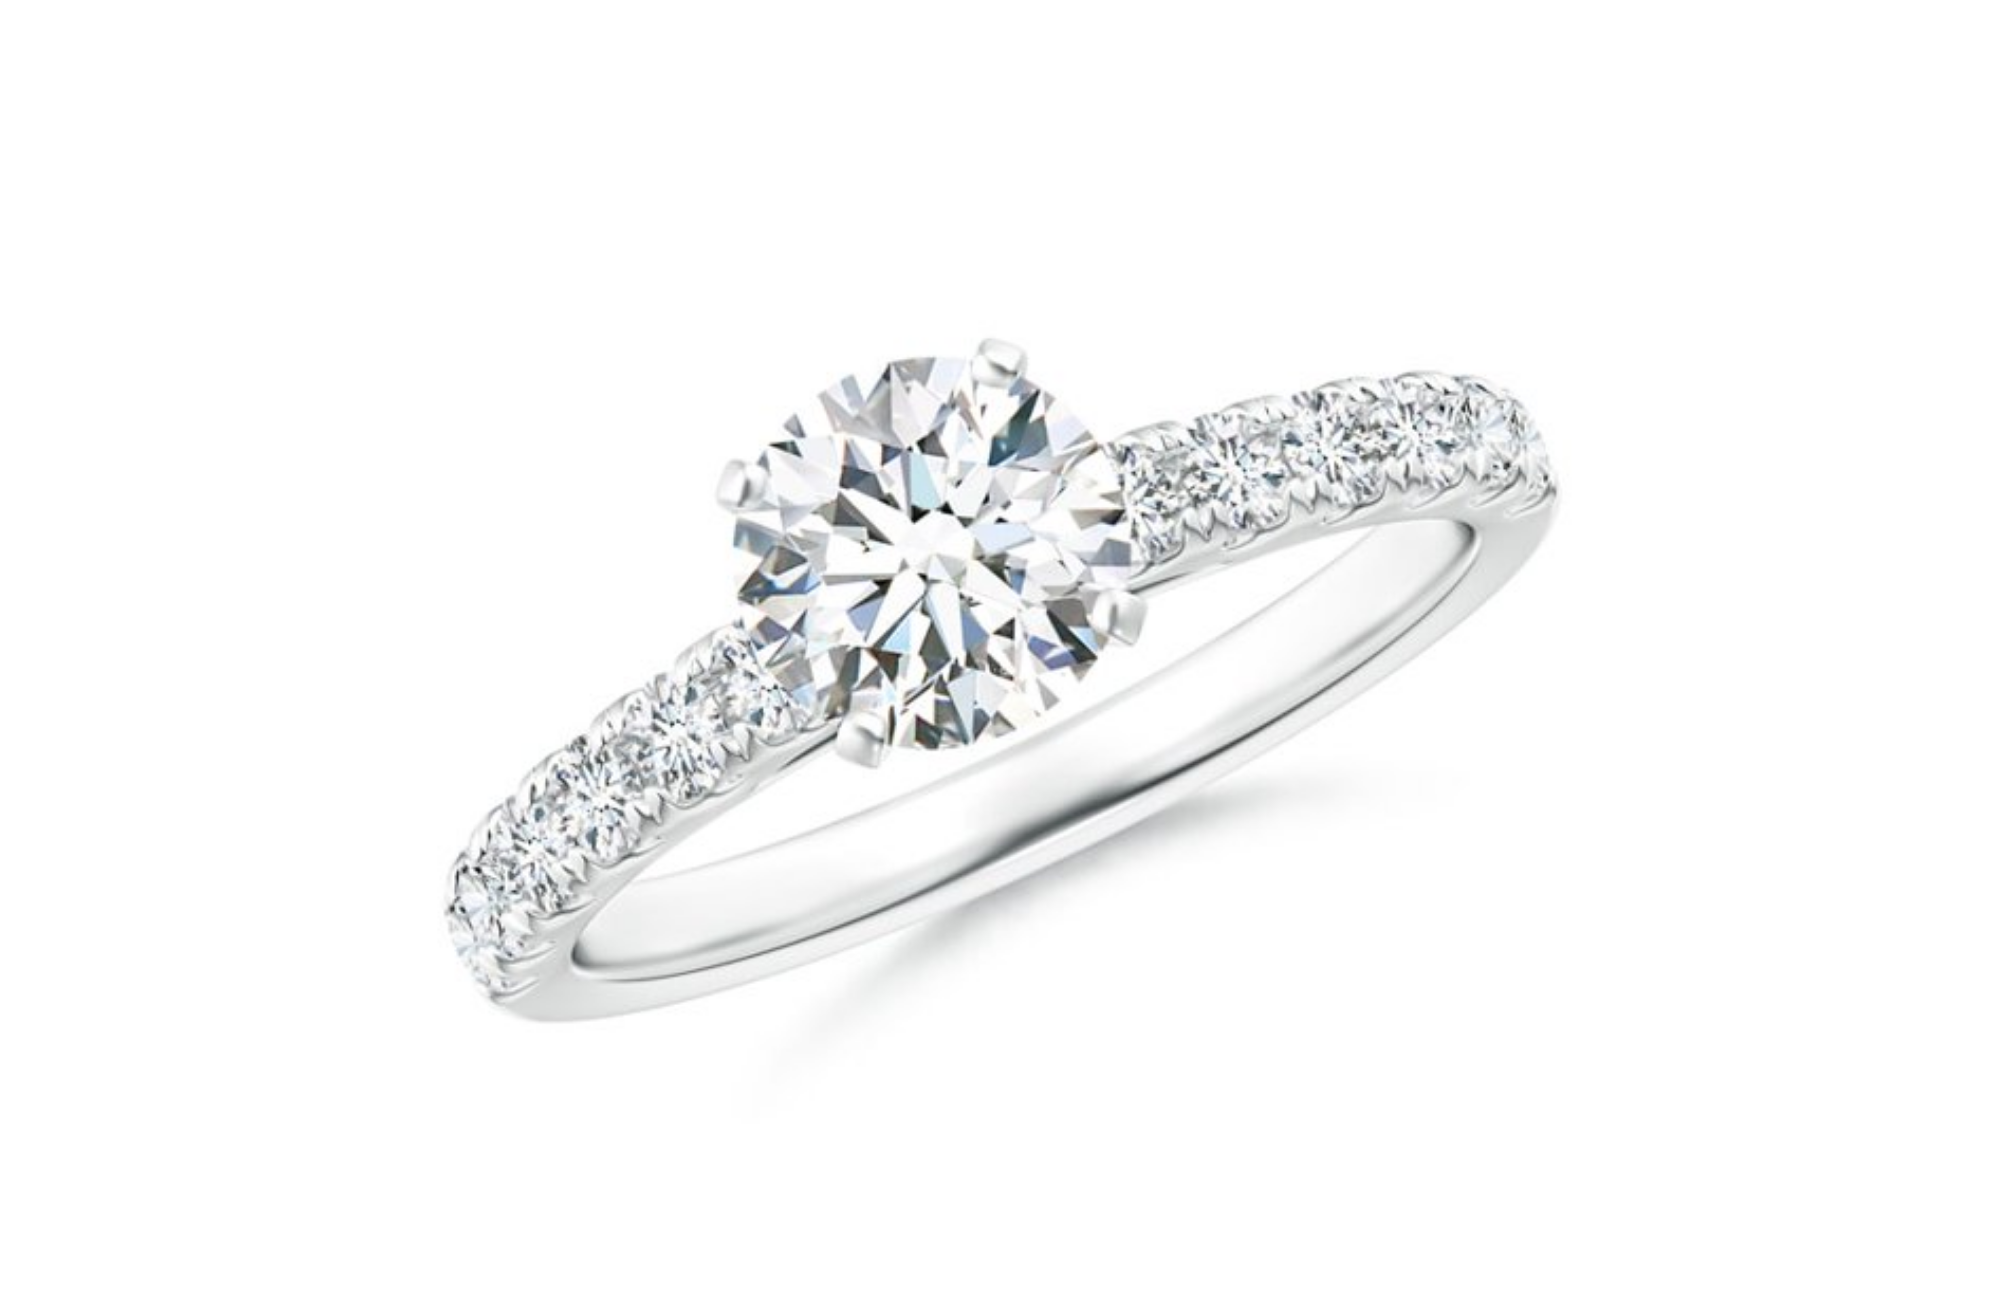 A sparkling round diamond ring